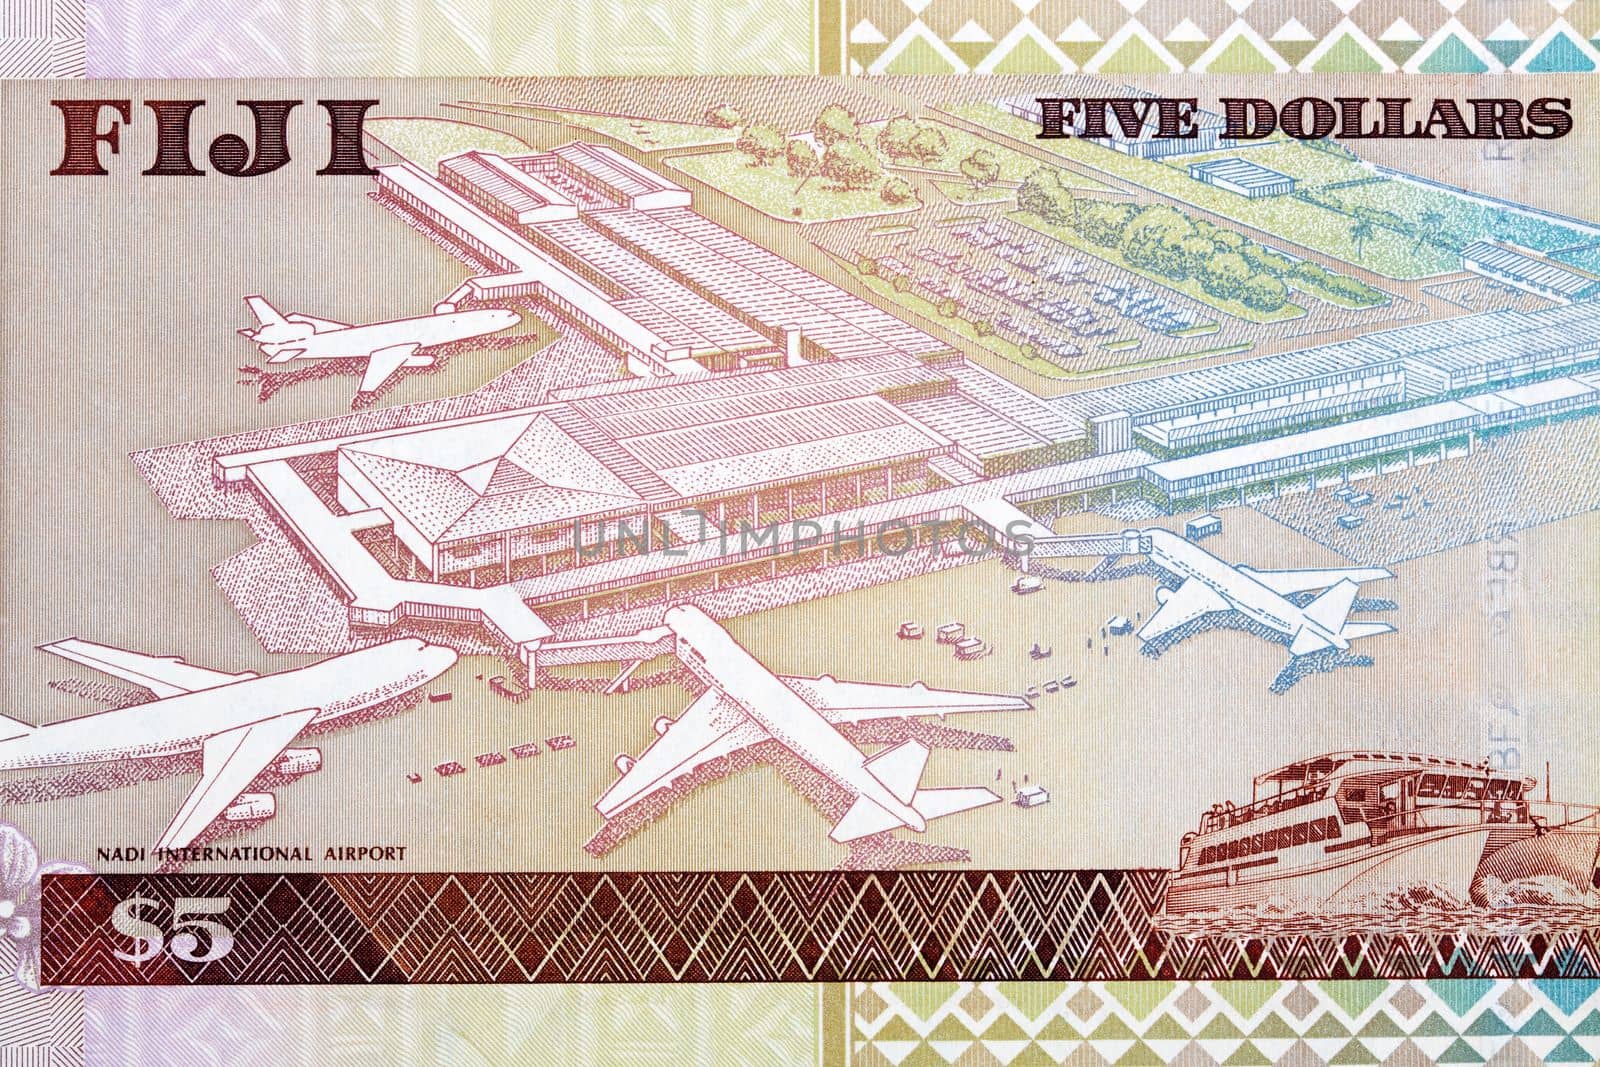 Aerial view of Nadi International Airport from Fijian money  by johan10